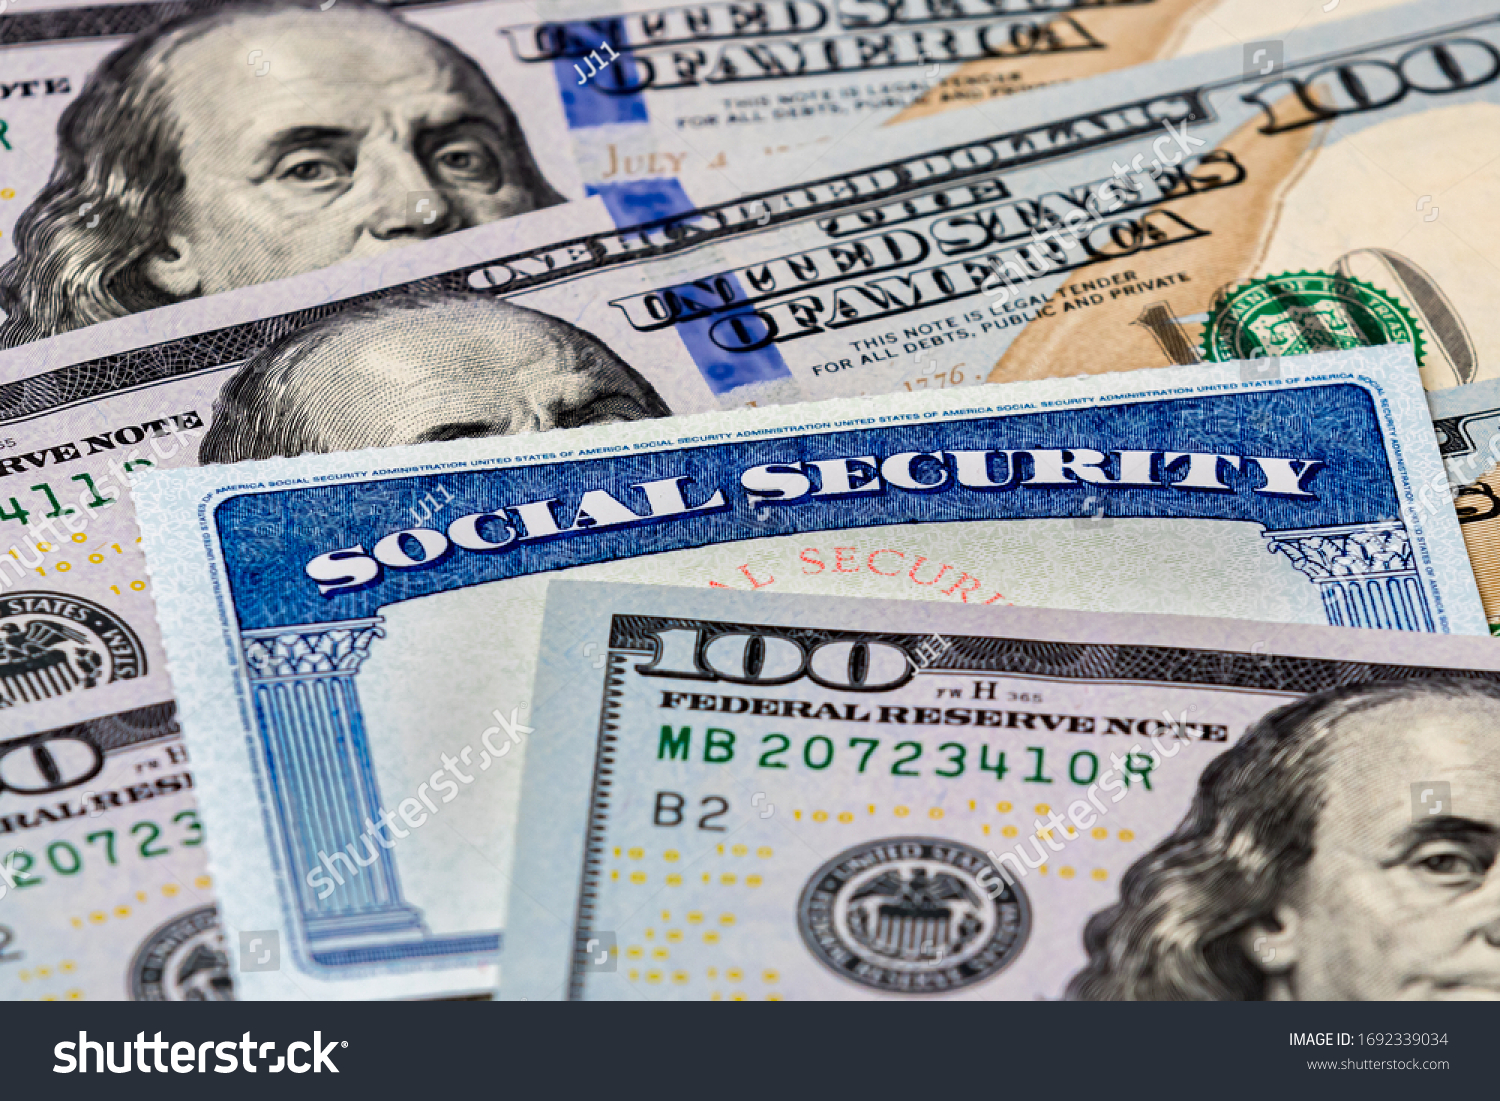 Closeup of Social Security benefits identification card with 100 dollar bills #1692339034